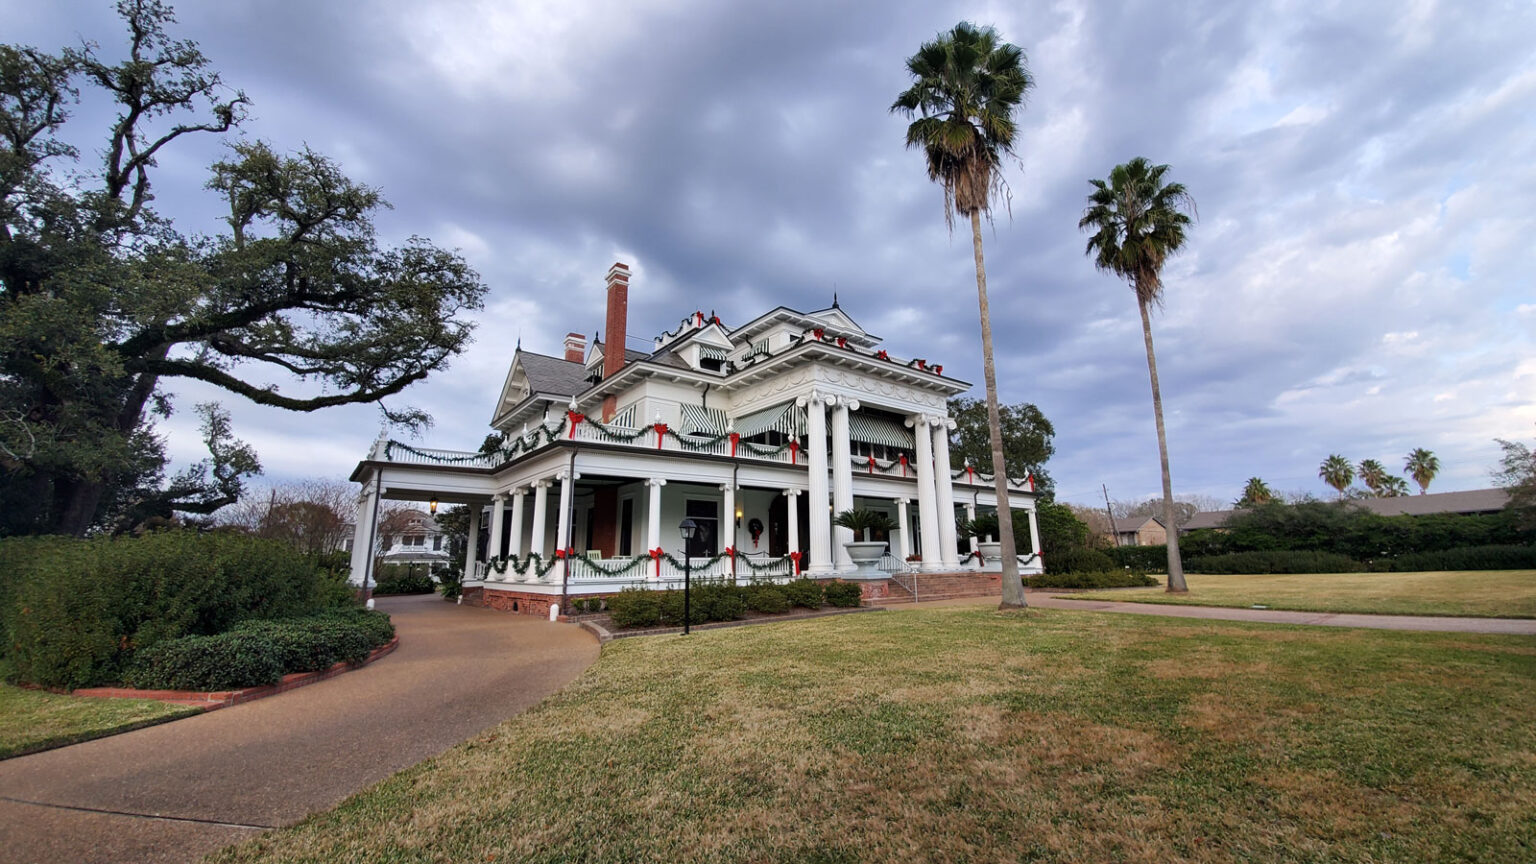 McFaddin-Ward Historic House Museum - Beaumont, Texas